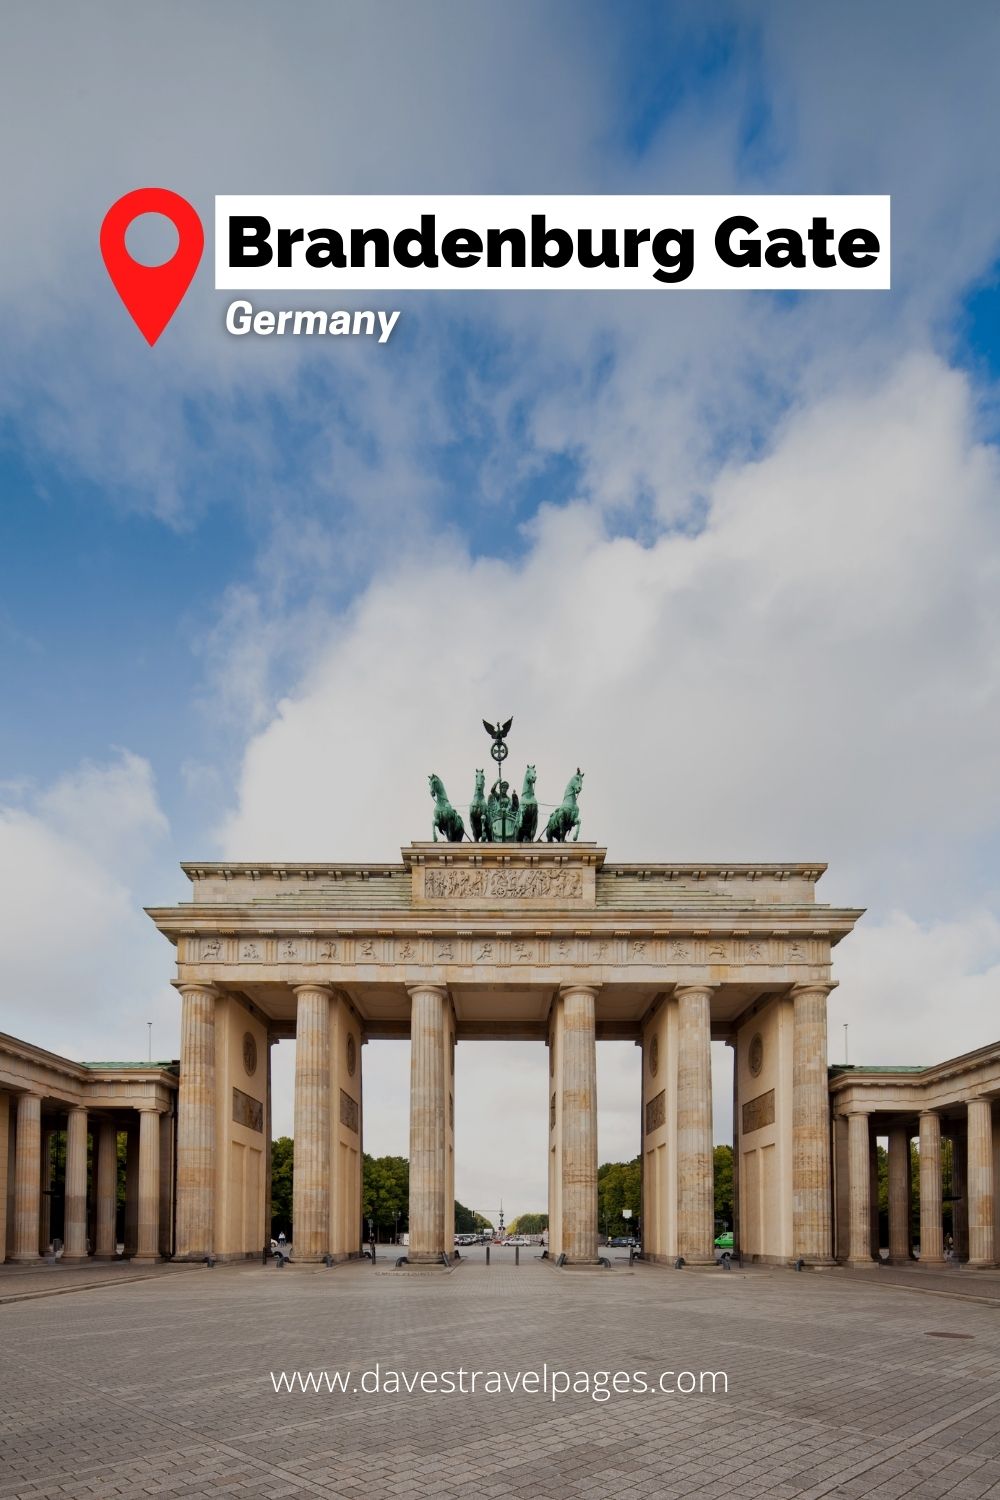 Brandenburg Gate is on a list of European landmarks